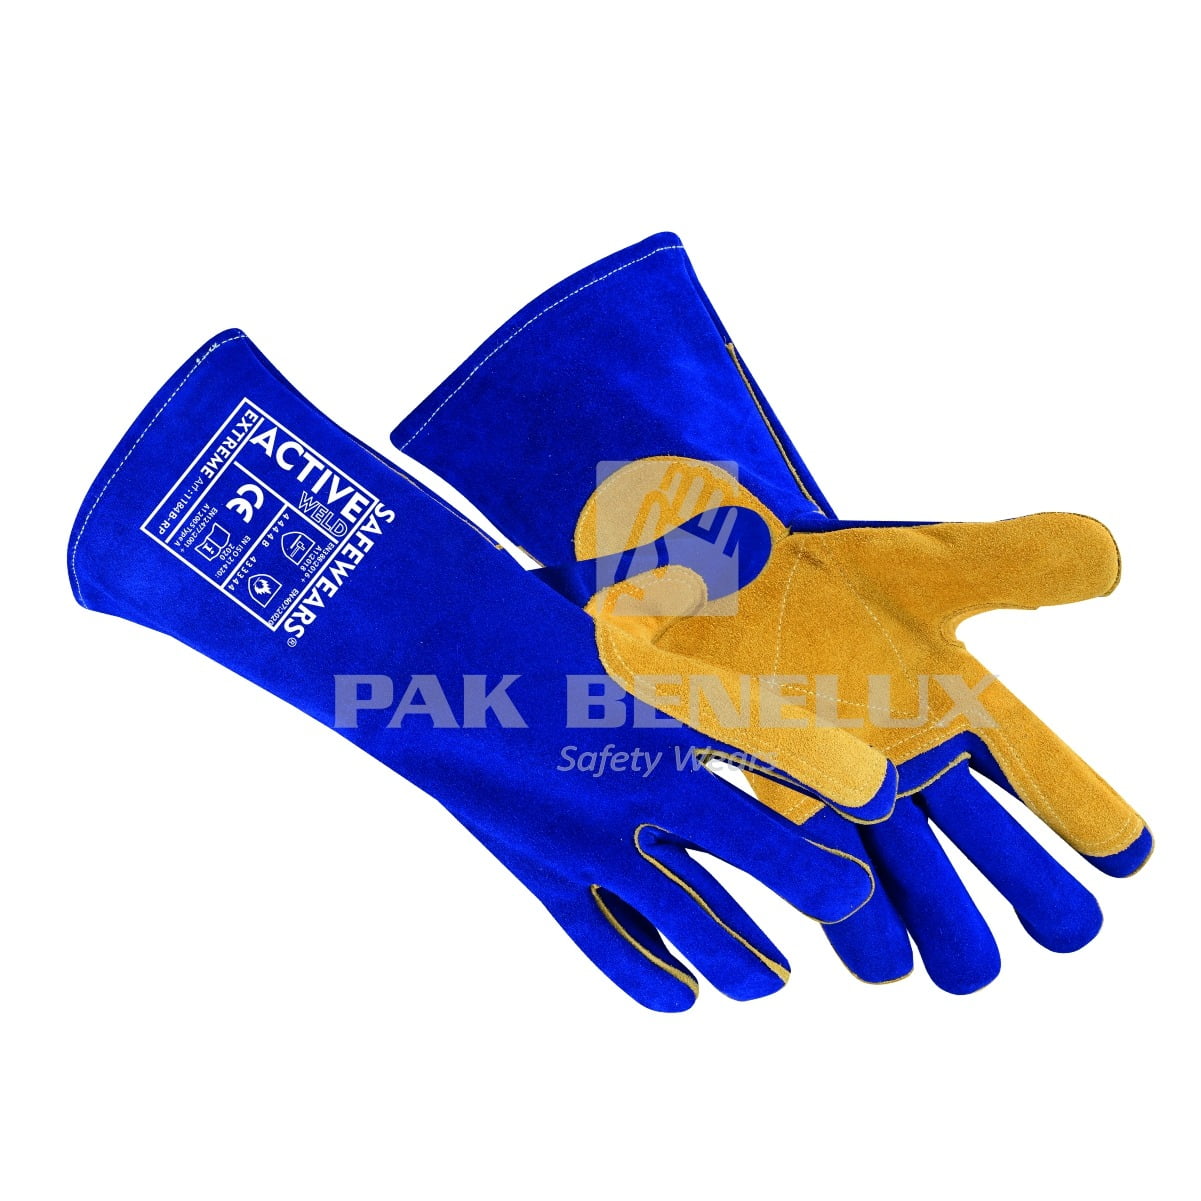 Welding Gloves Manufacturer in Pakistan